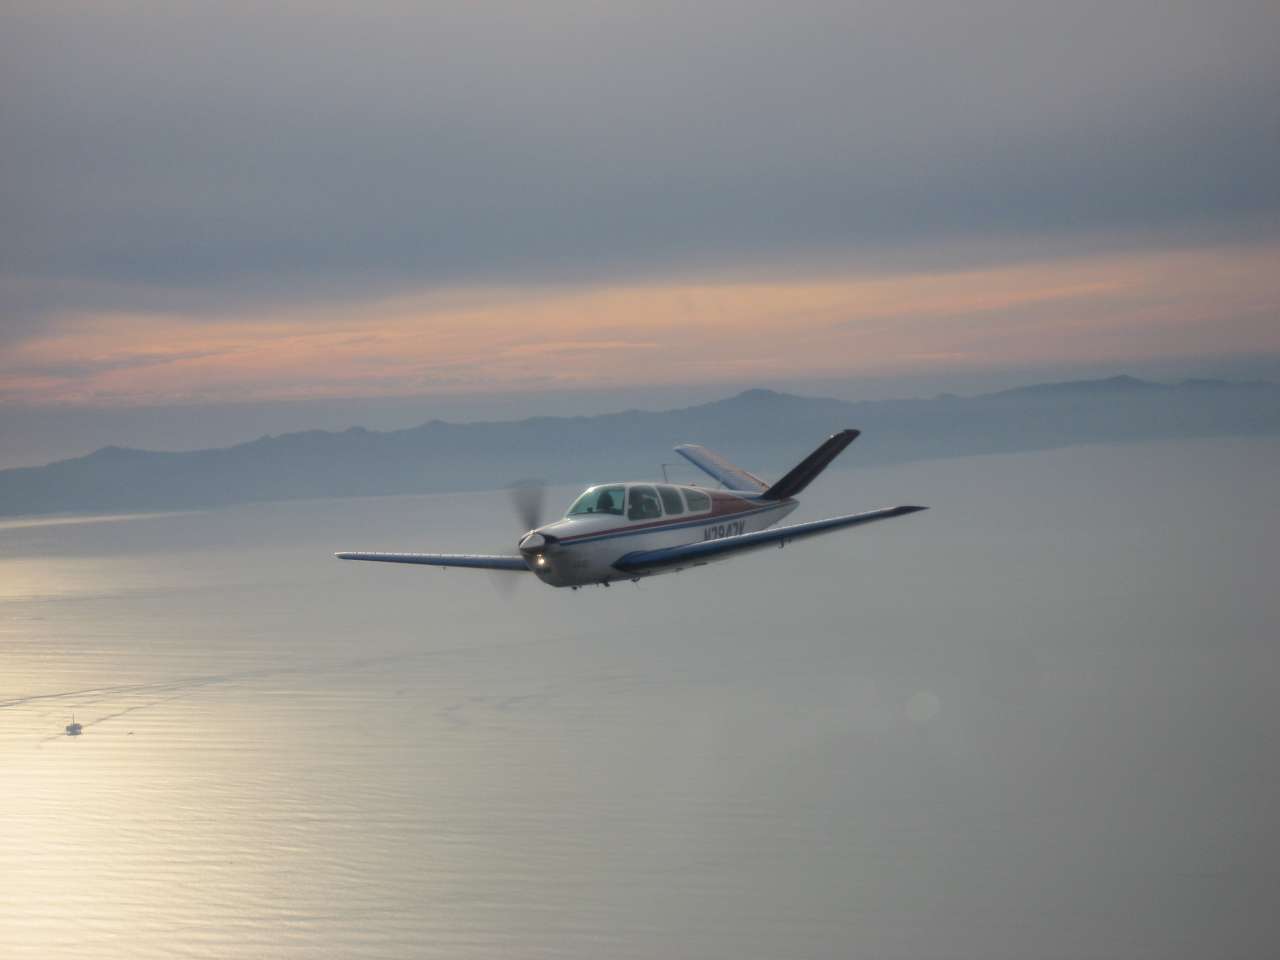 N7947K over Santa Barbara